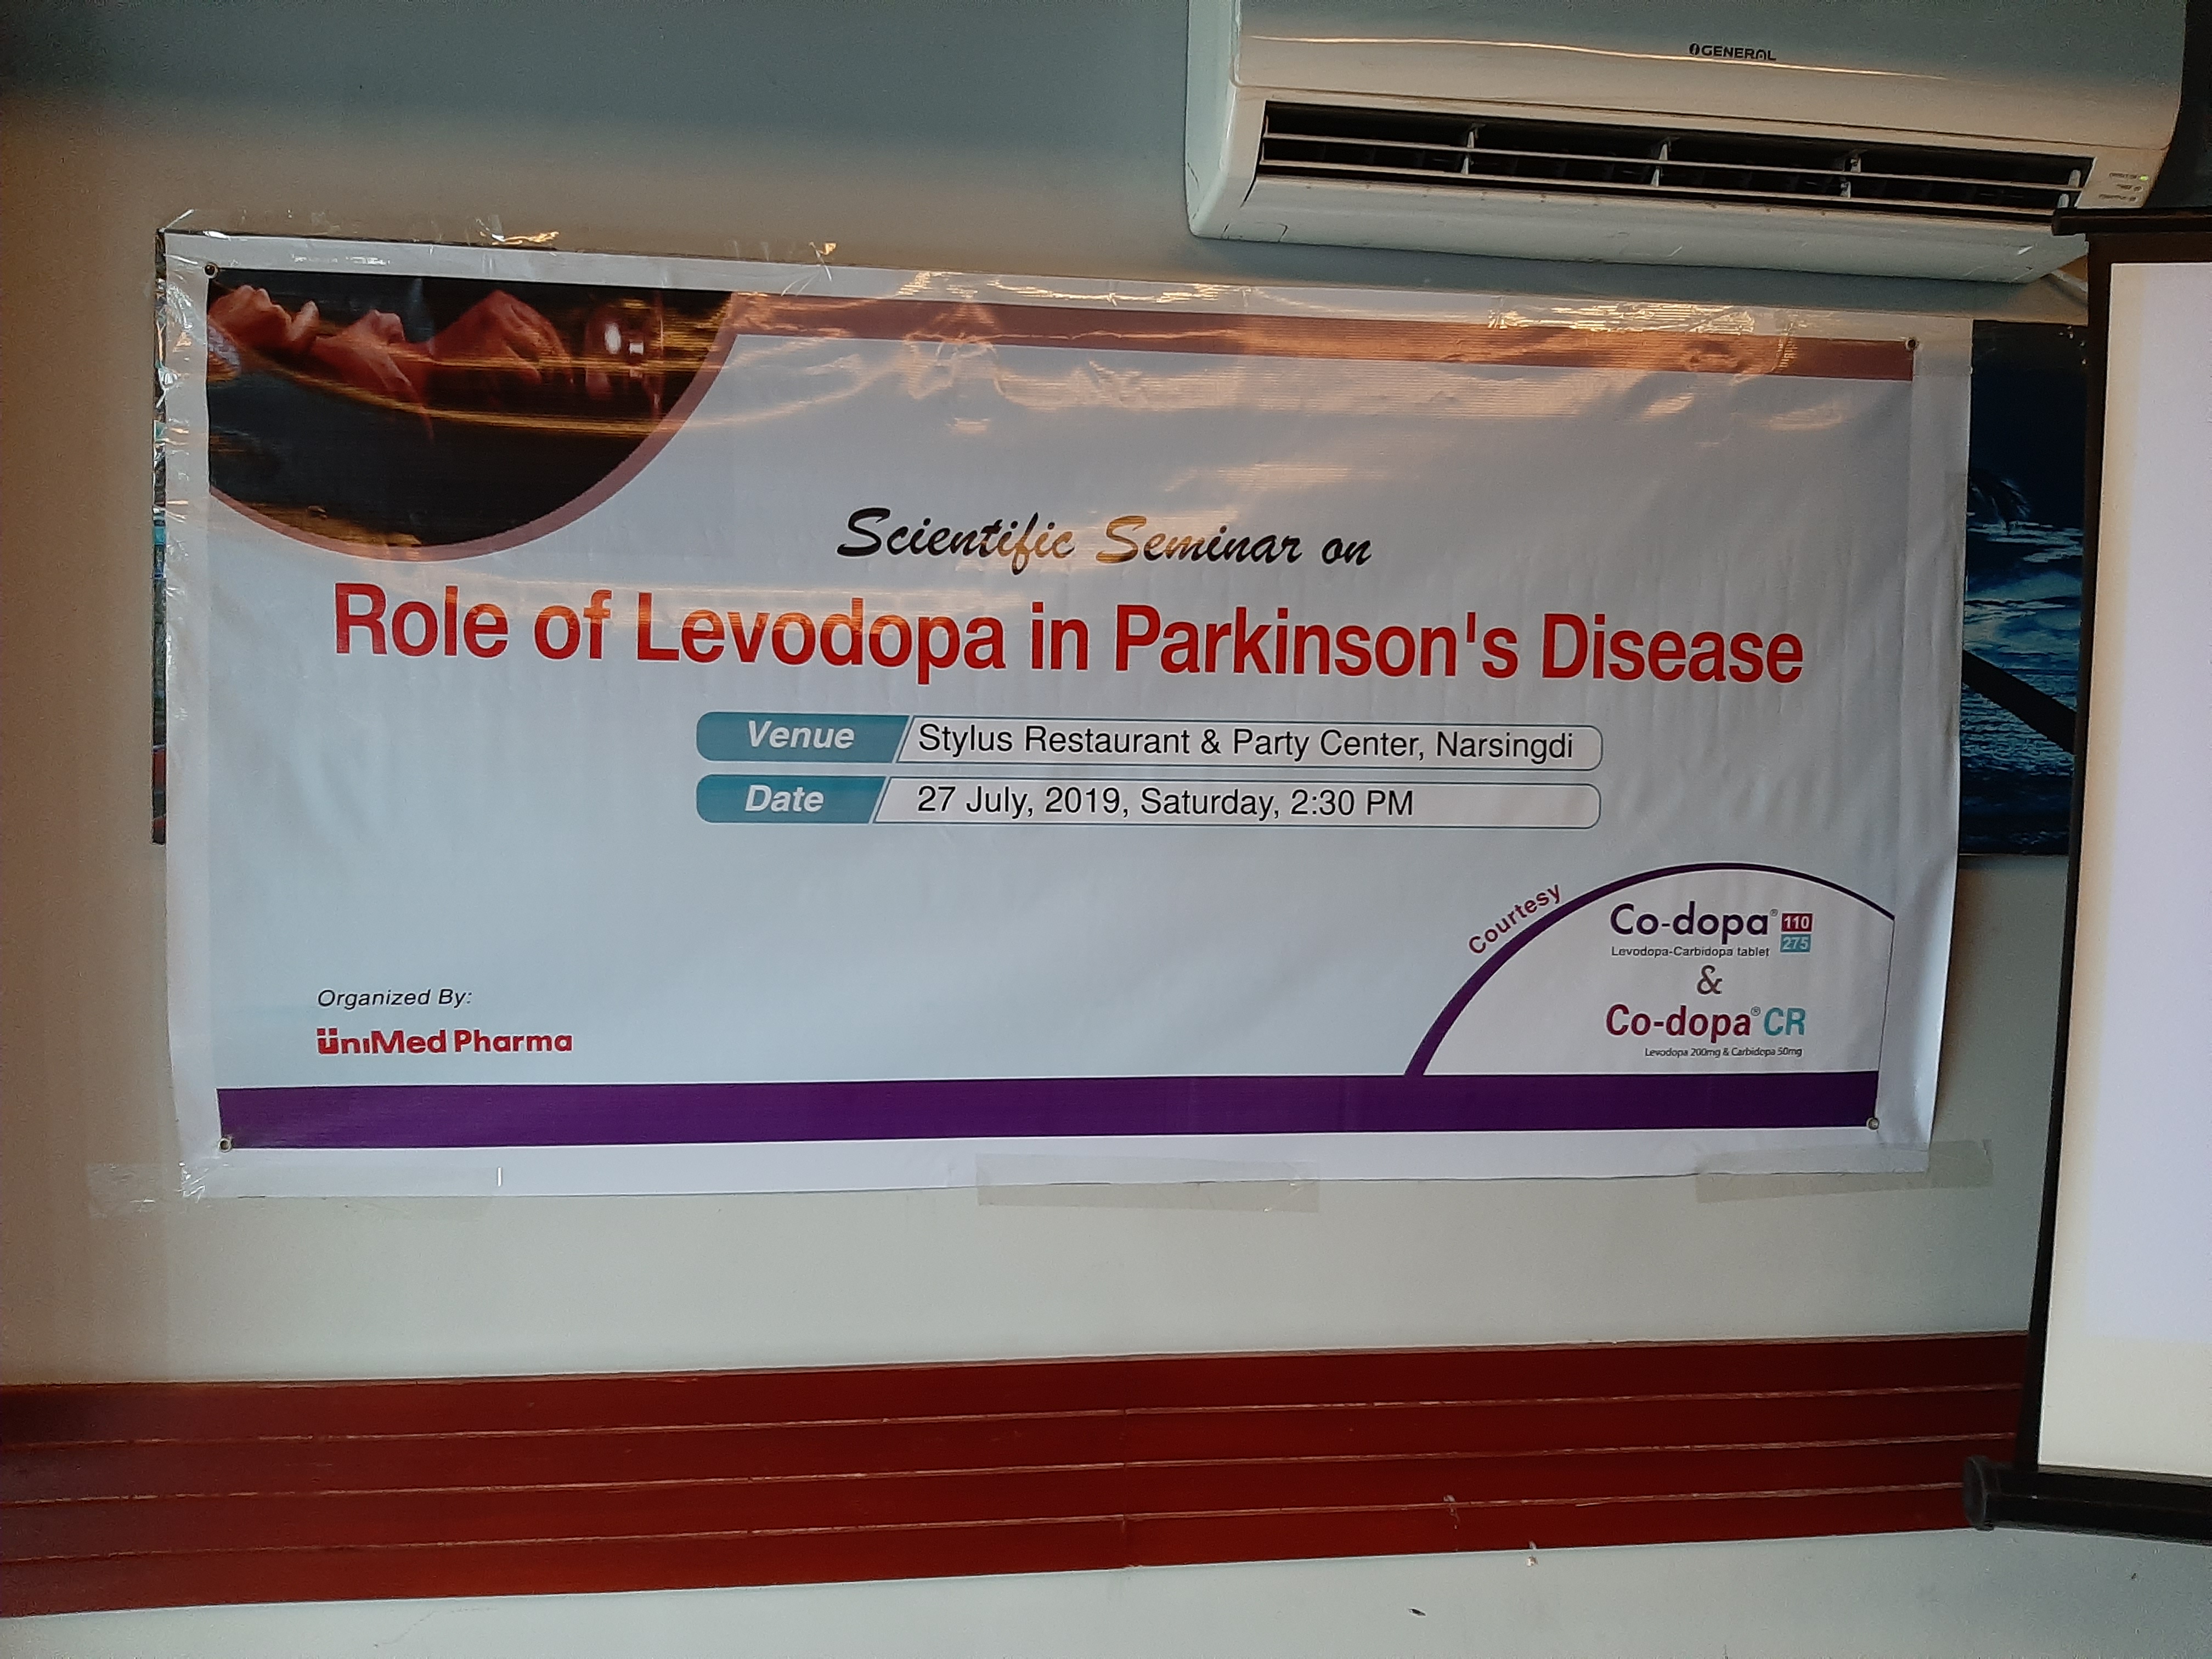 The scientific seminar on “Role of Levodopa in Parkinson’s Disease”